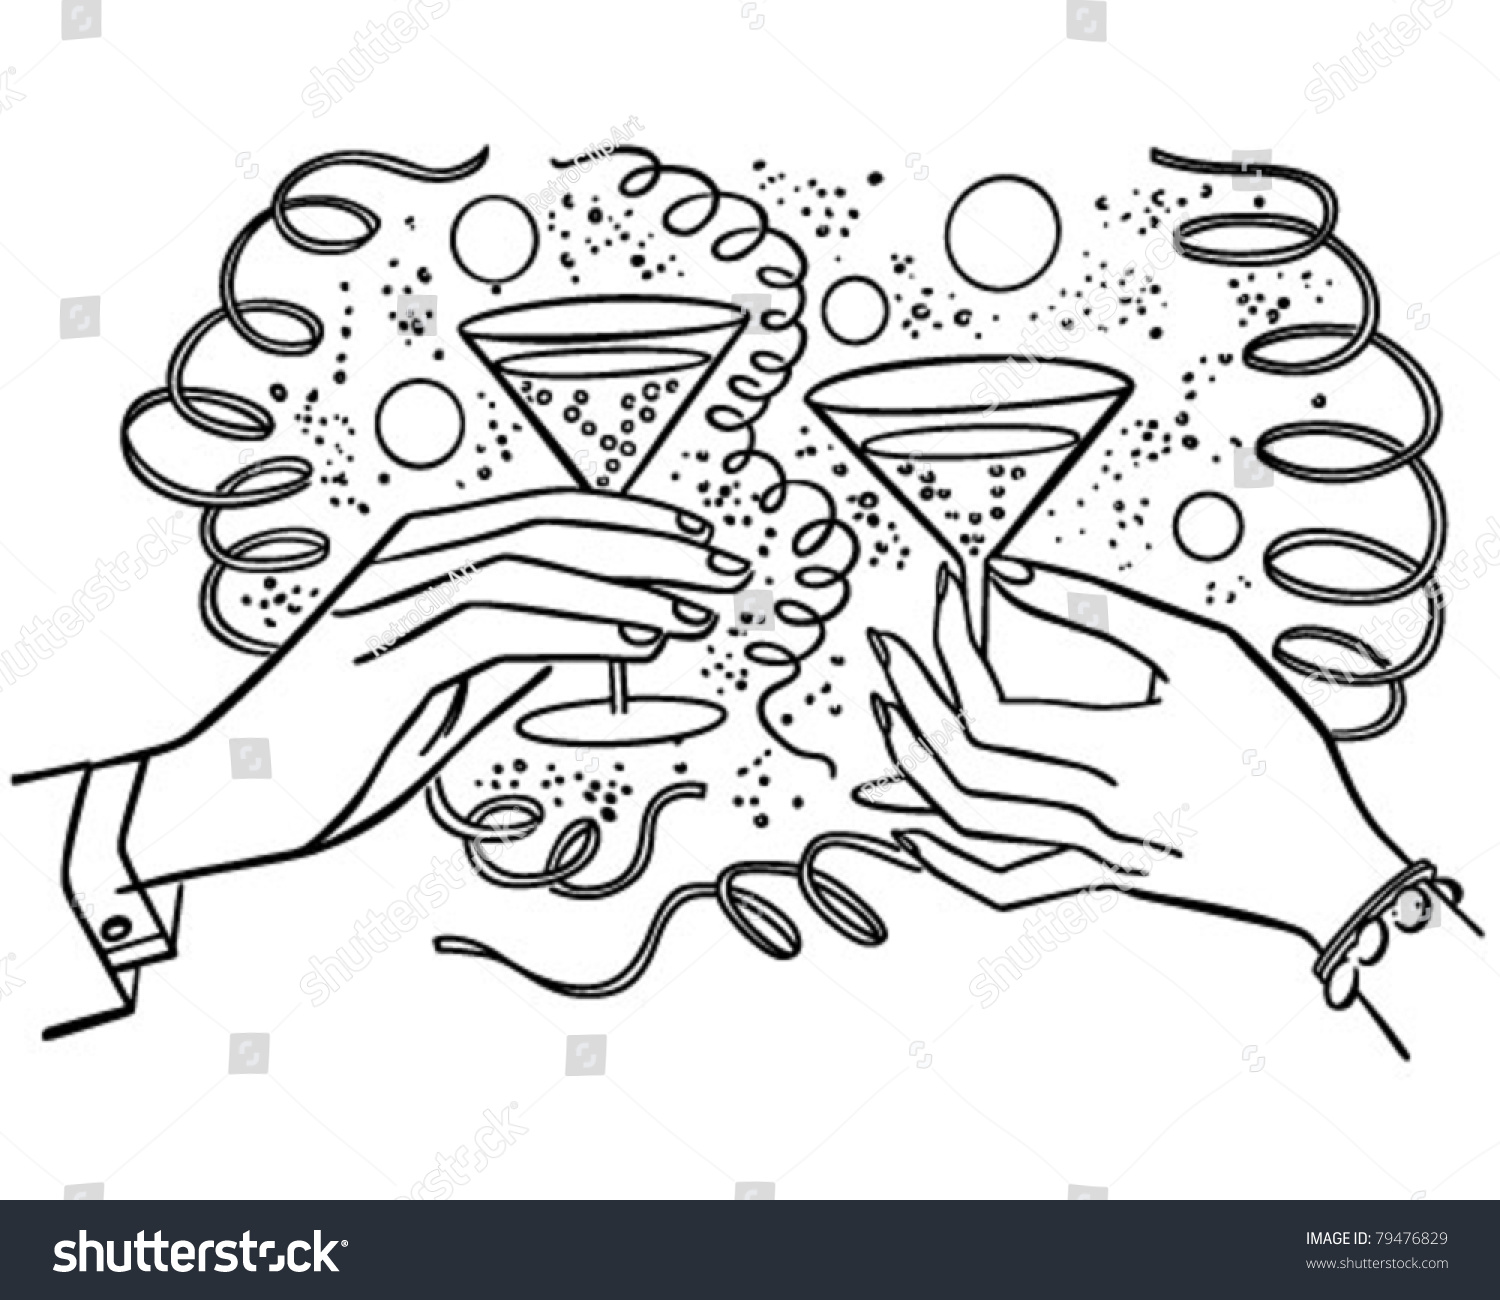 SVG of Hands Toasting Drinks - Retro Clipart Illustration svg